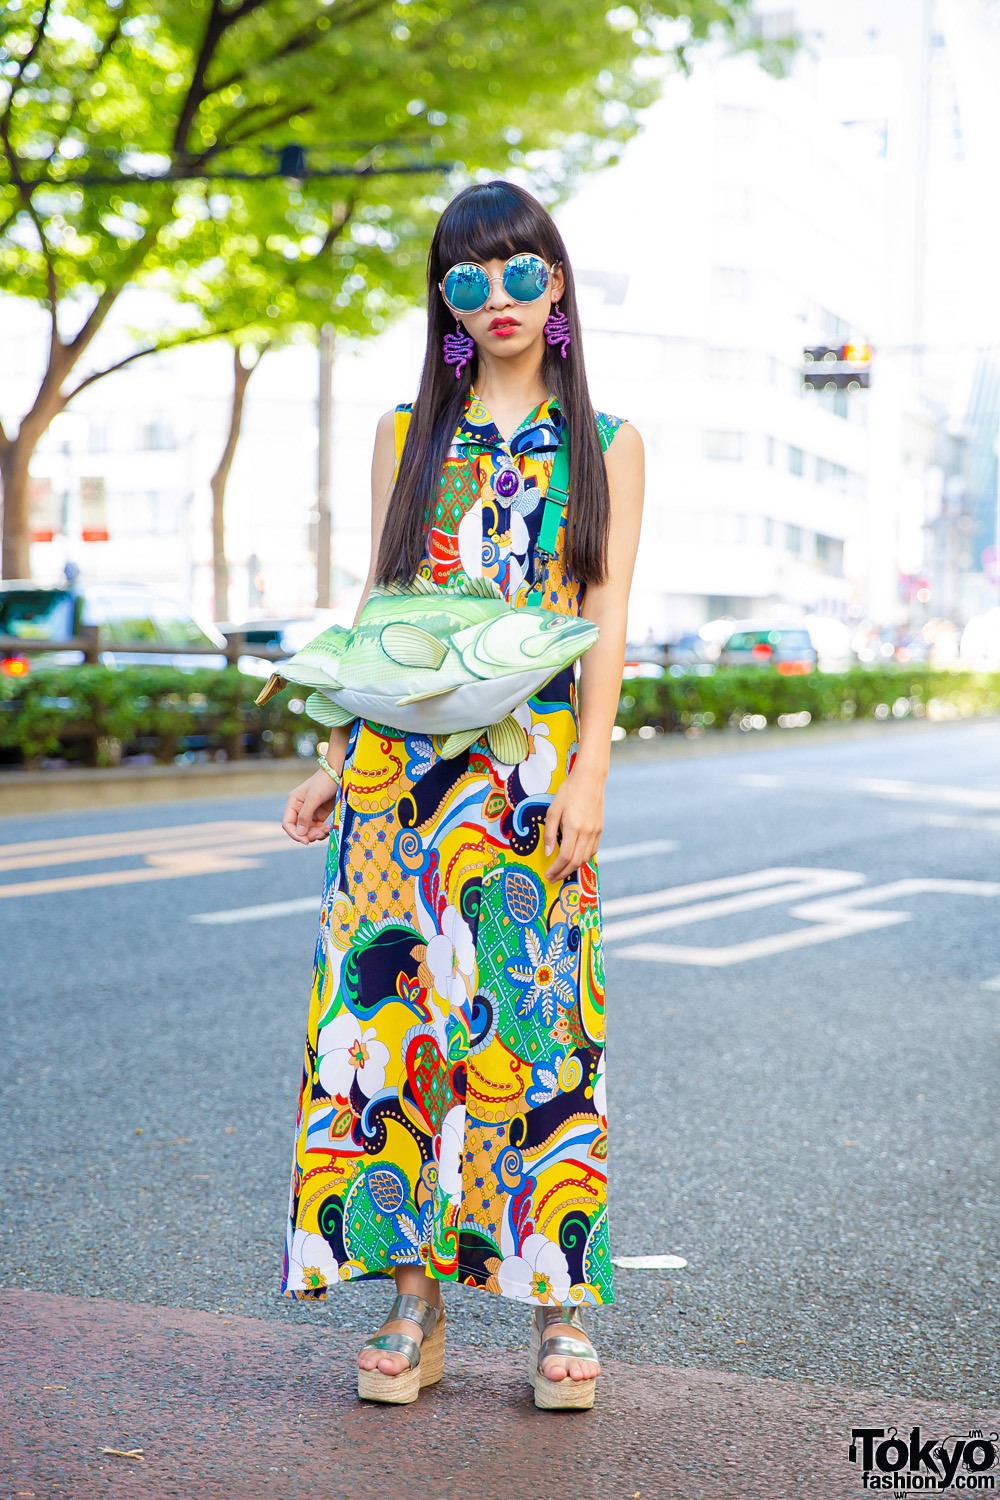 Harajuku Girl w/ Multicolored Floral Dress, Snake Earrings, Cork Platform Sandals & Fish Bag